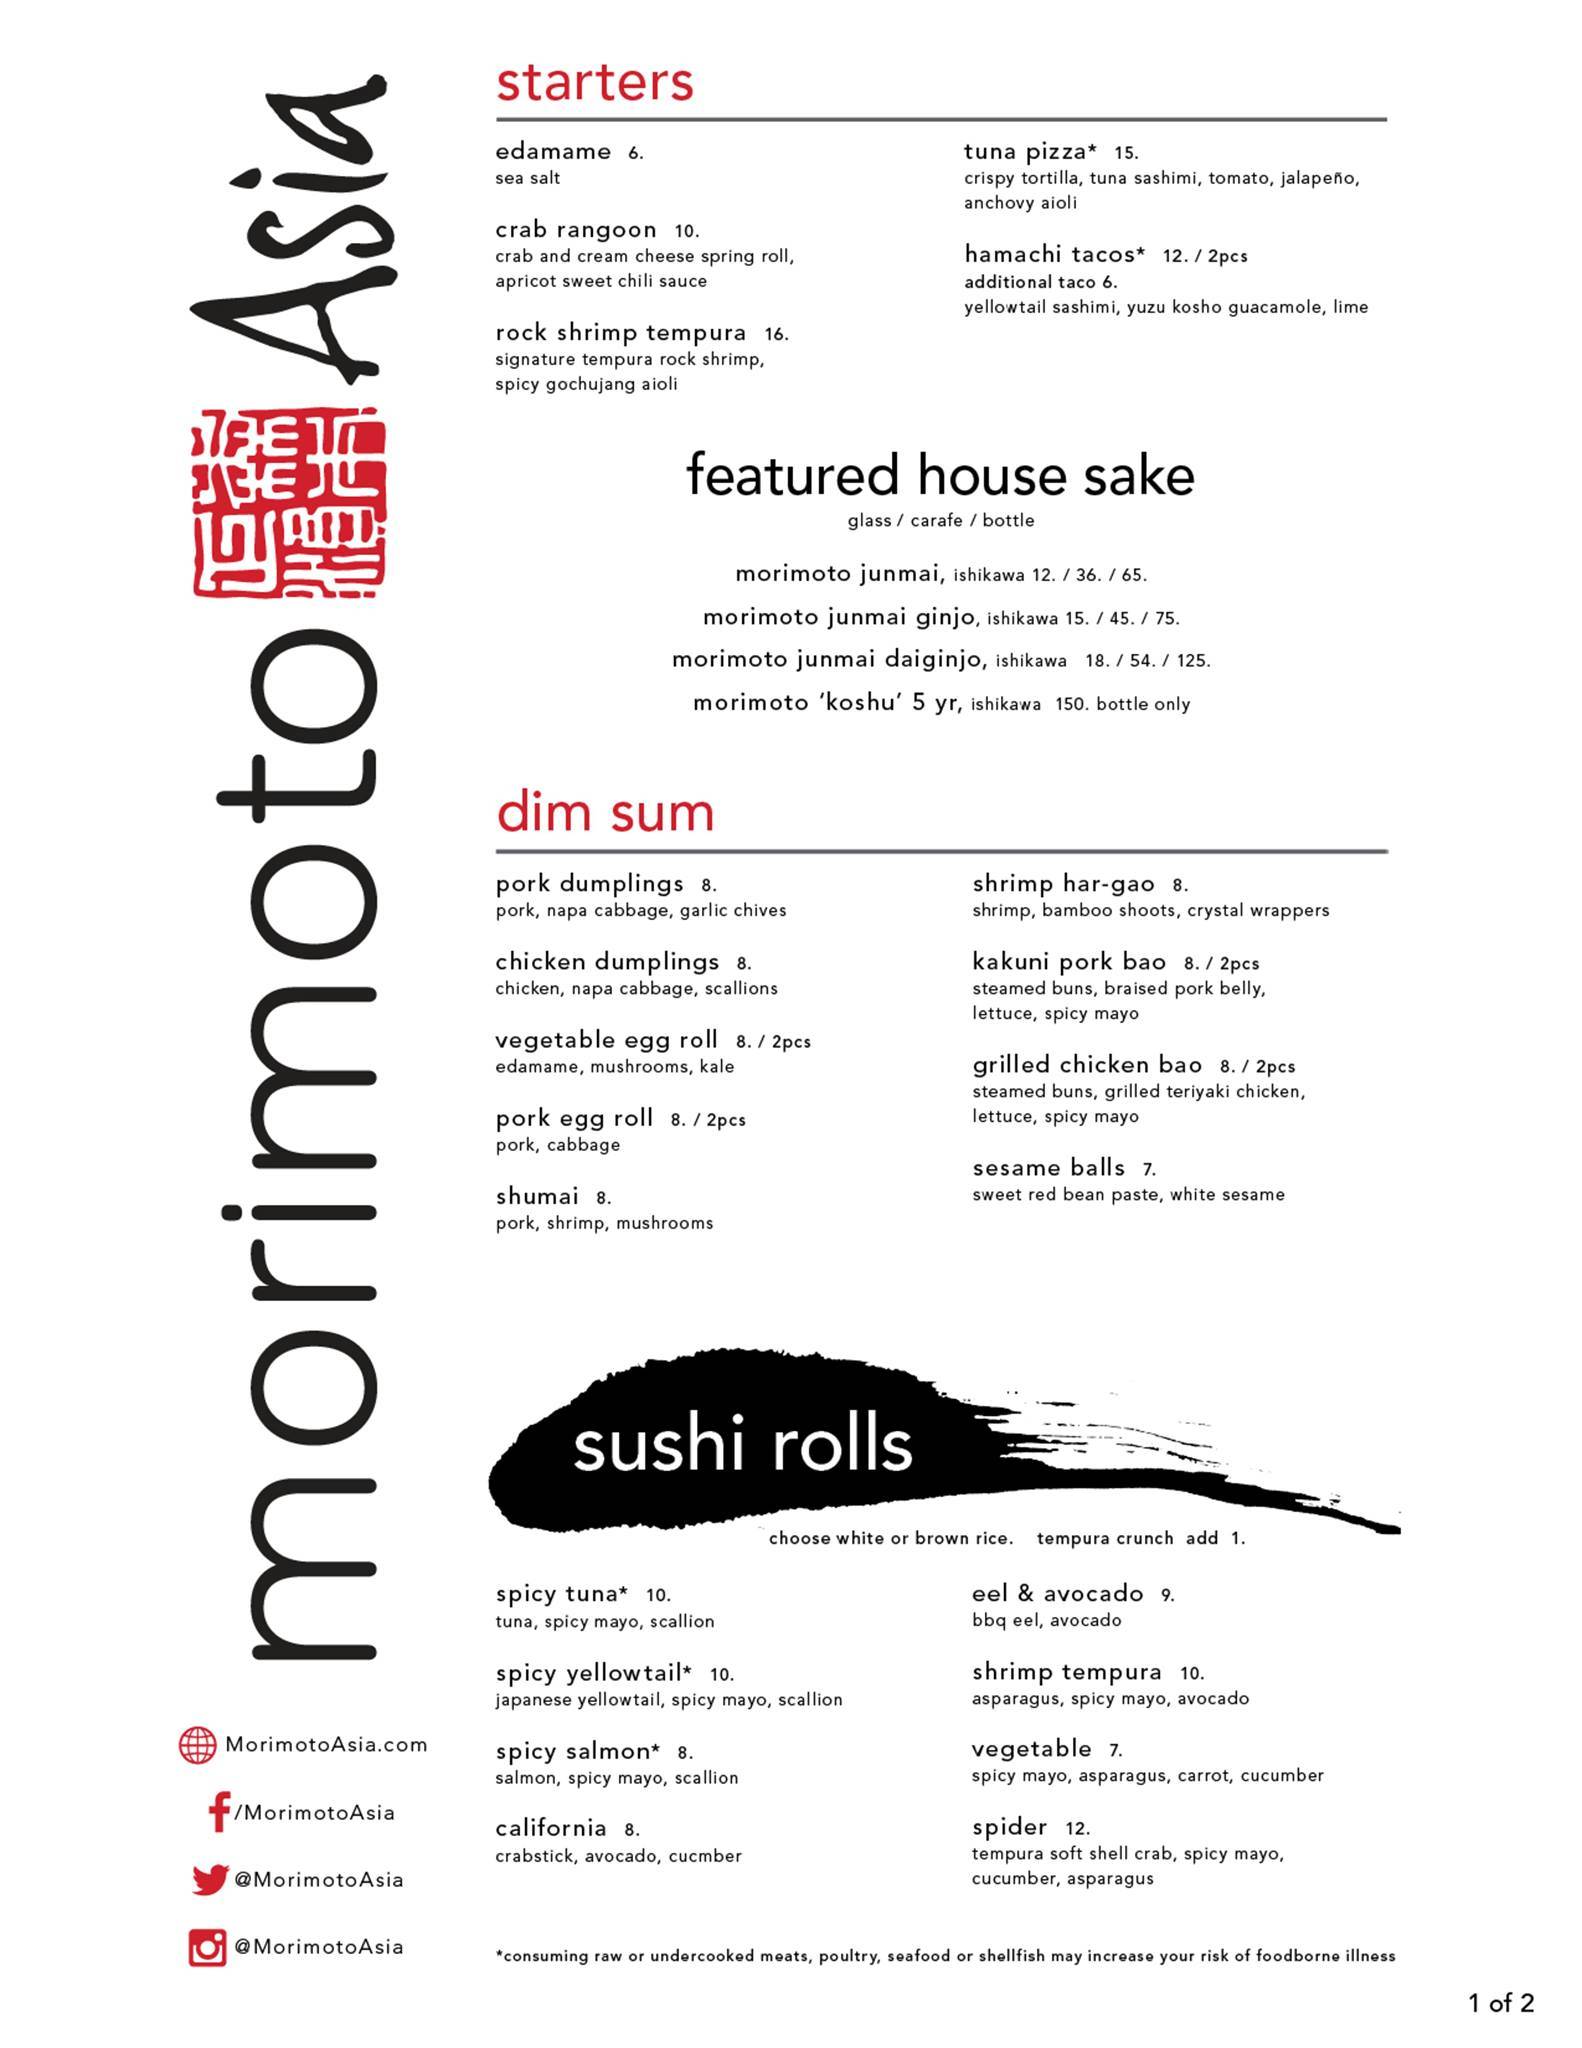 FIRST LOOK -  Full menu for Morimoto Asia - opening next week at Disney Springs